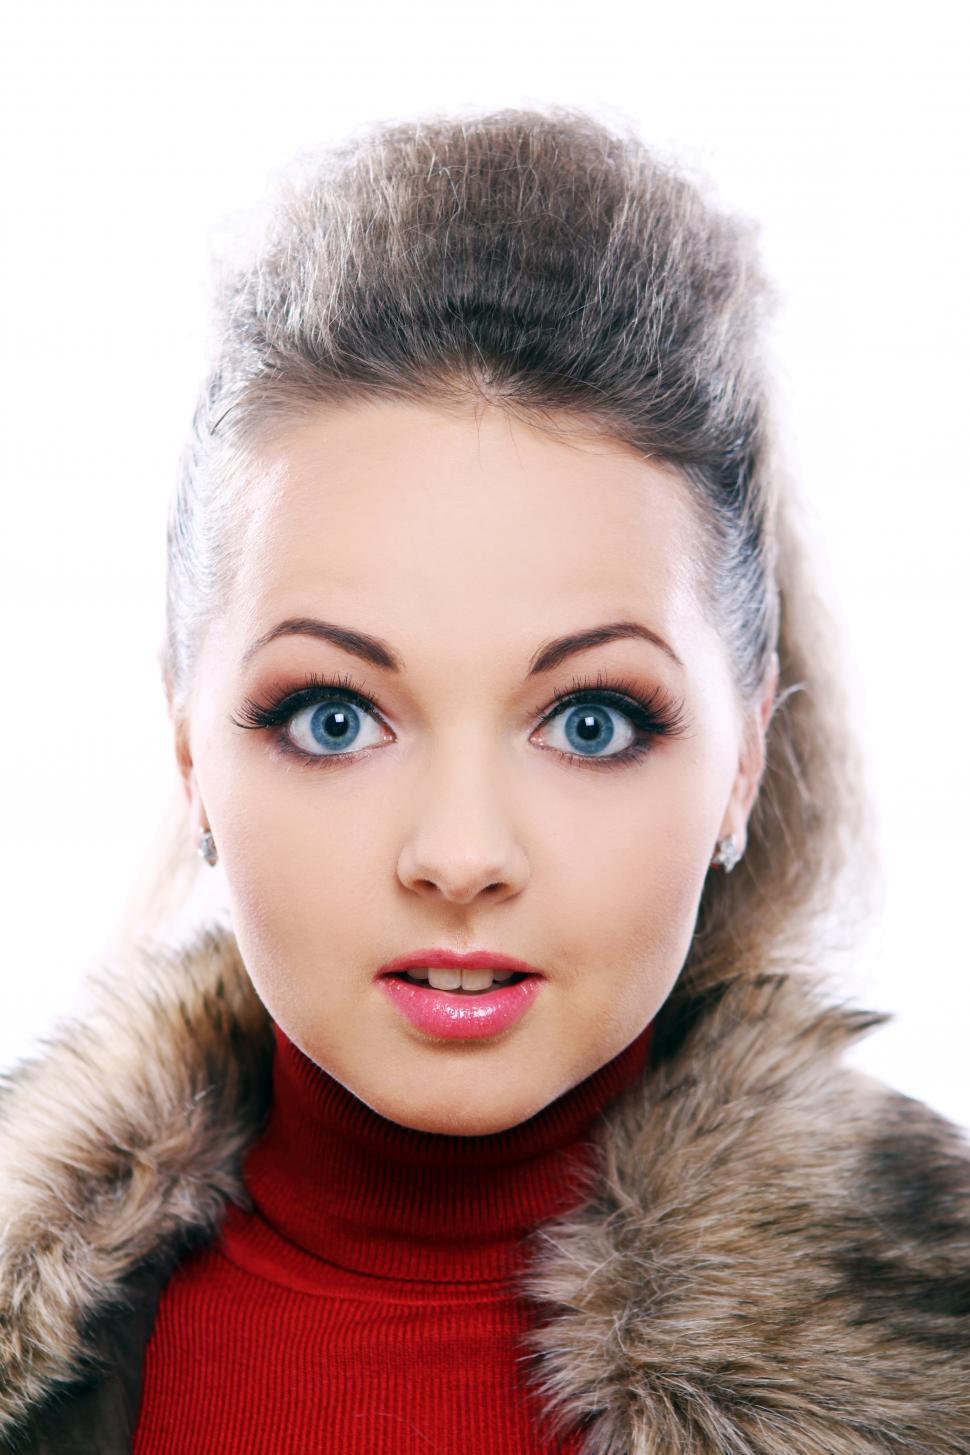 Free Image of Headshot of woman with striking blue eyes 